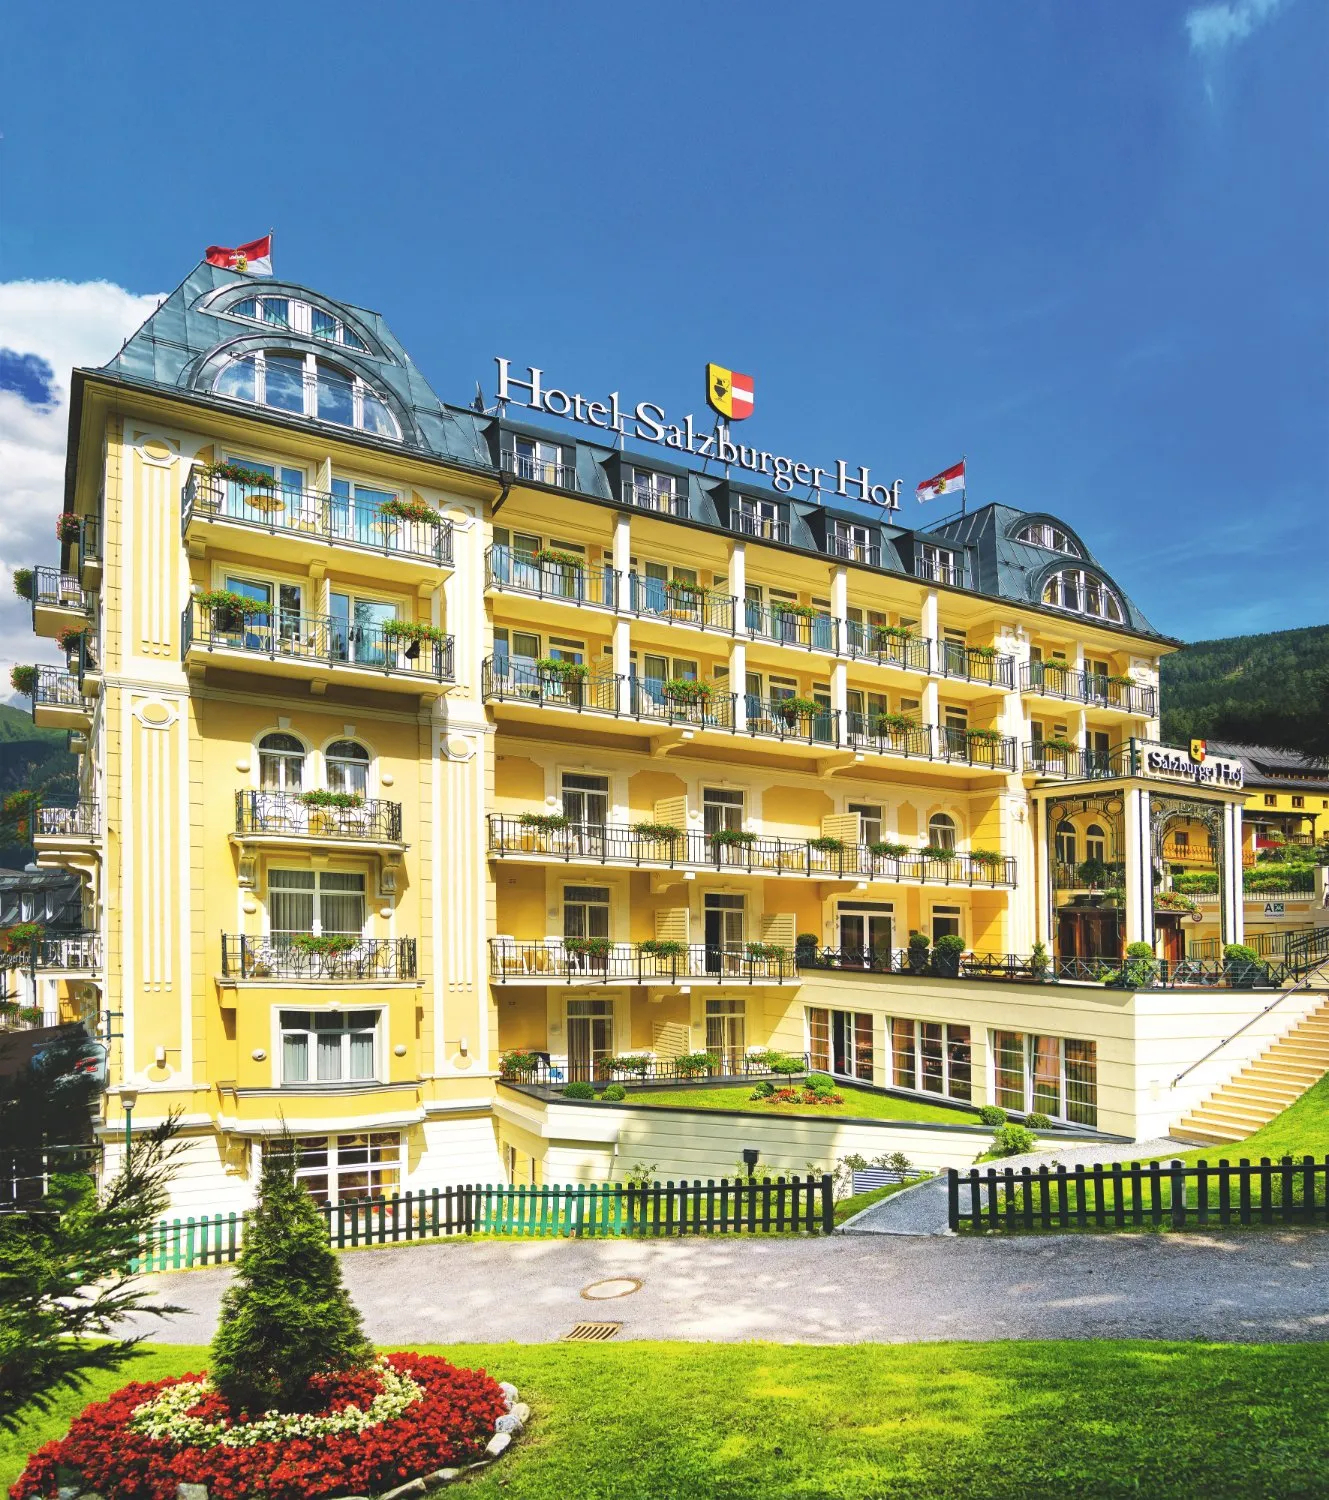 Building hotel Hotel Salzburger Hof